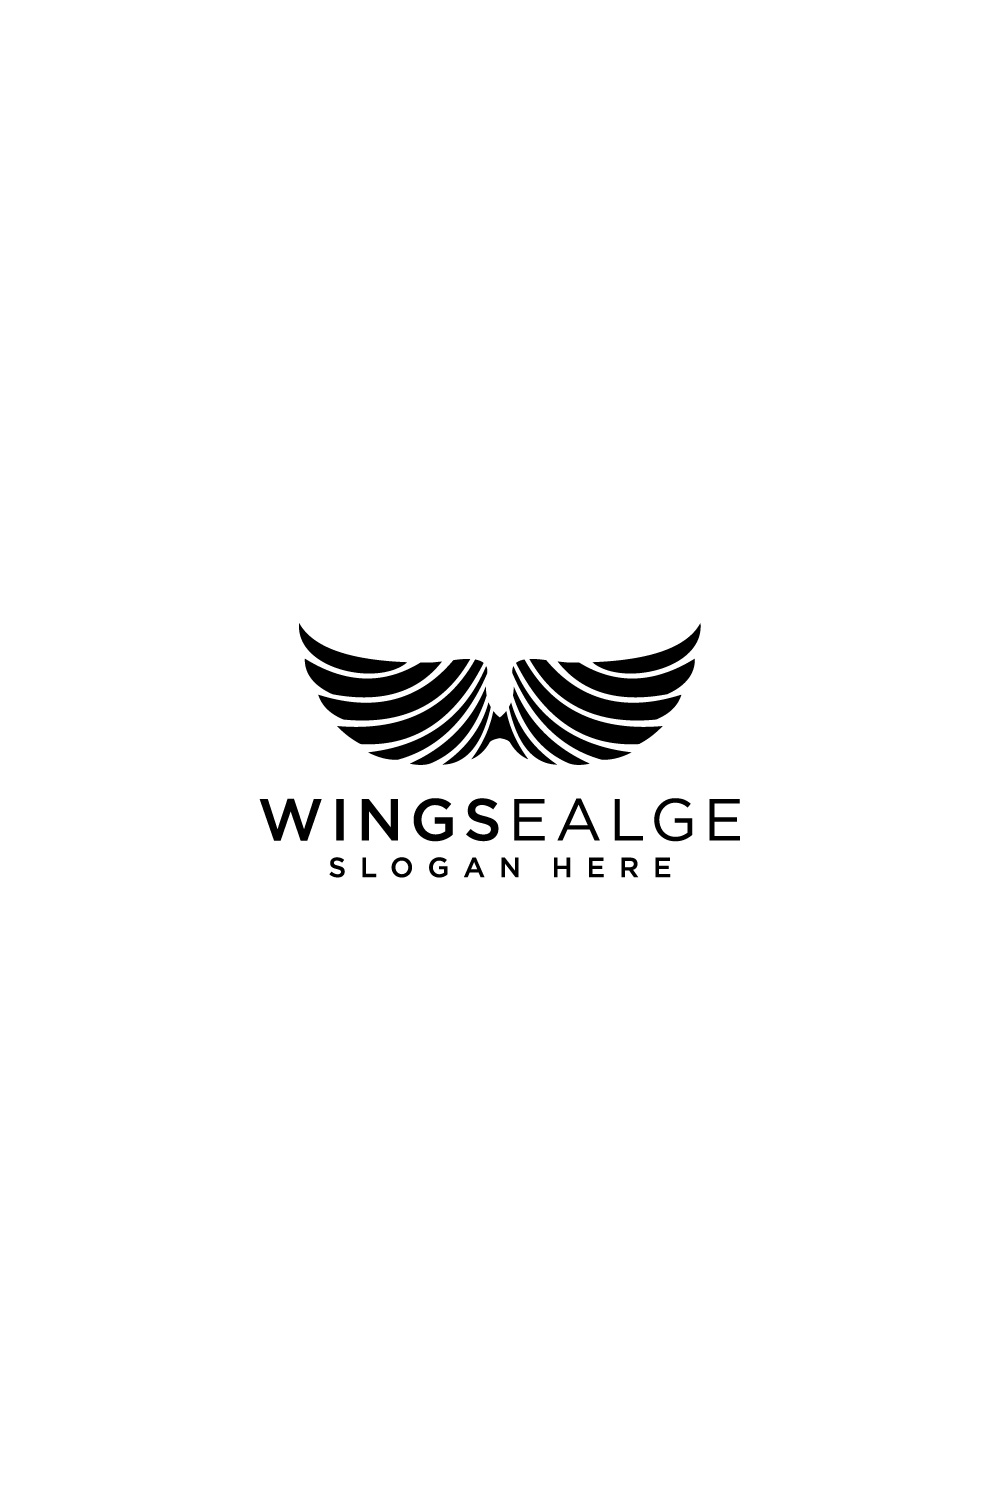 wings eagle logo vector design pinterest preview image.